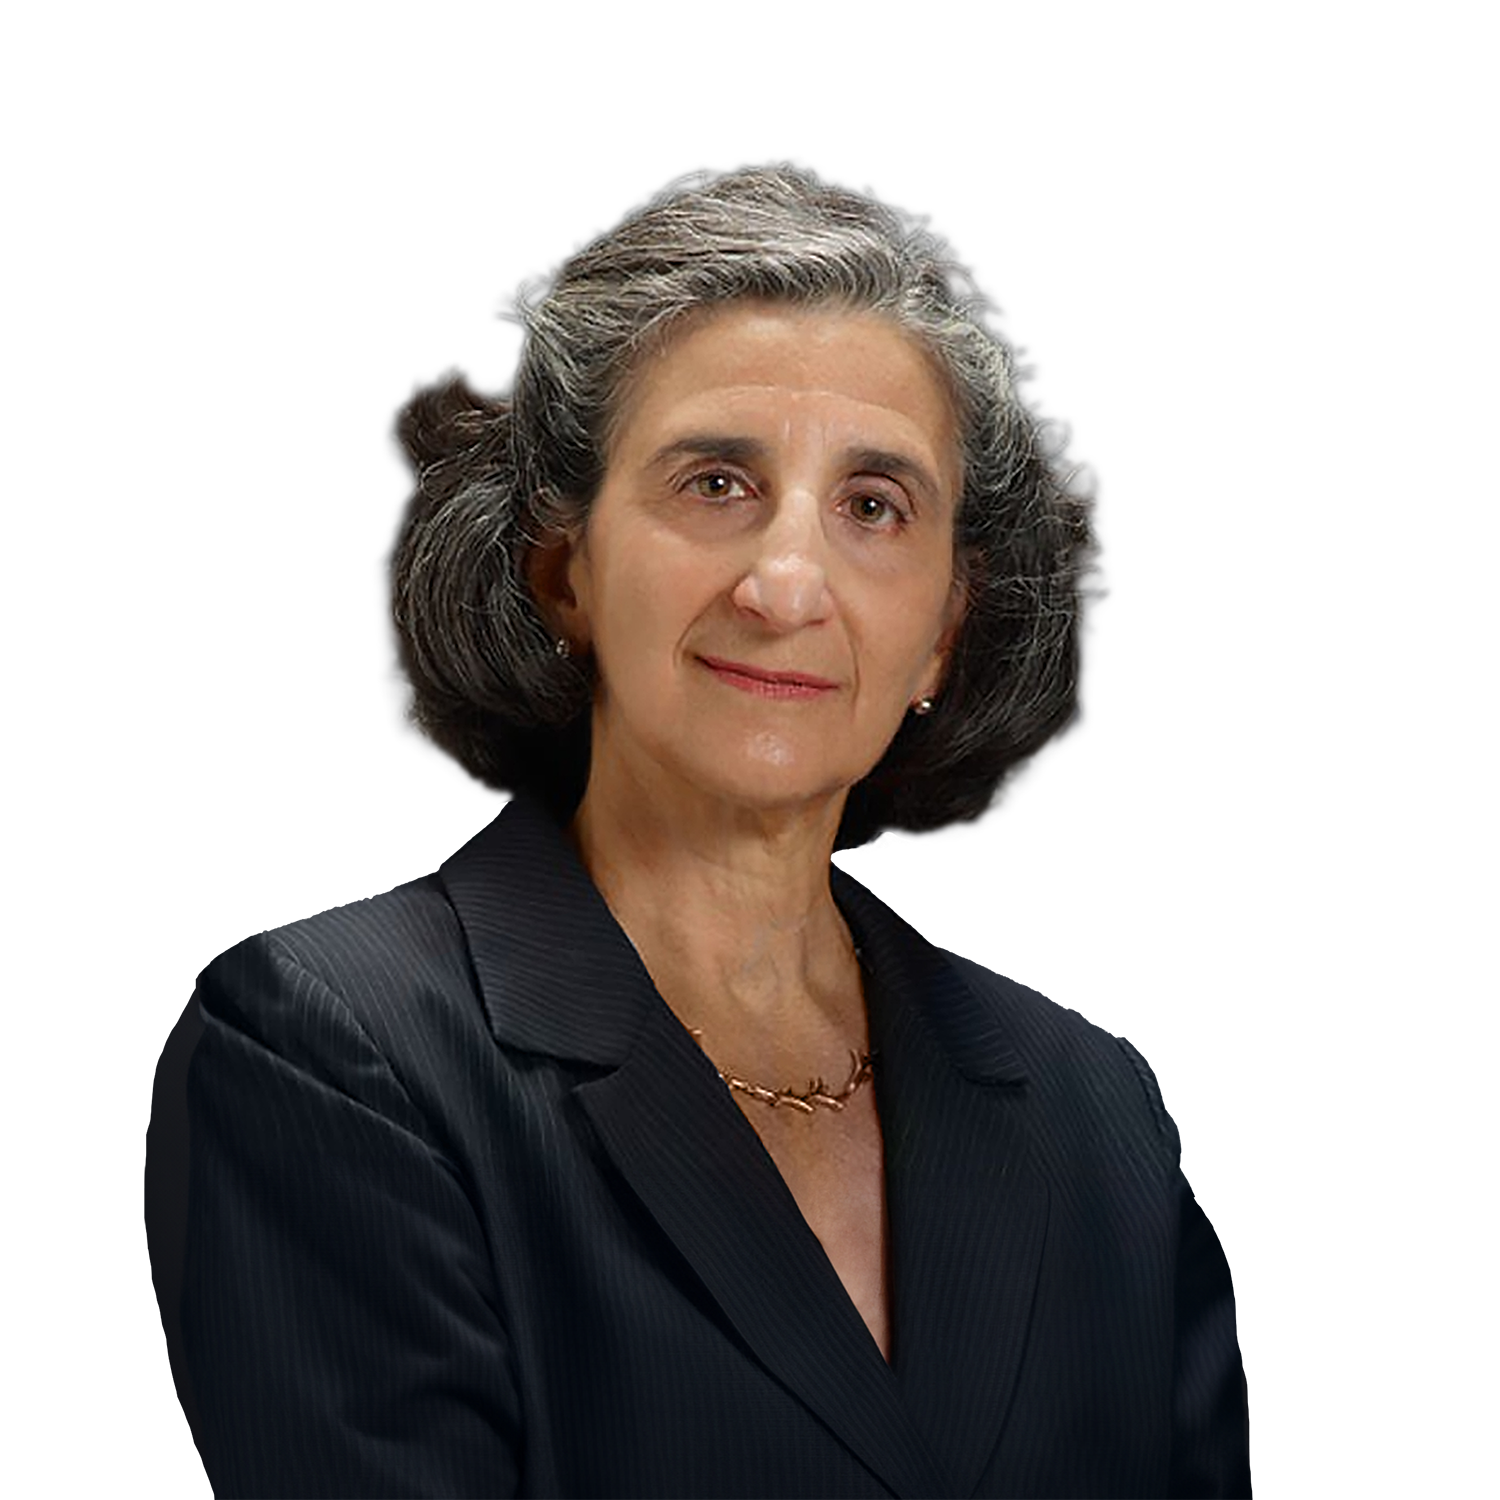 Astrid Noltemy - Former Managing Director, Cambridge Associates